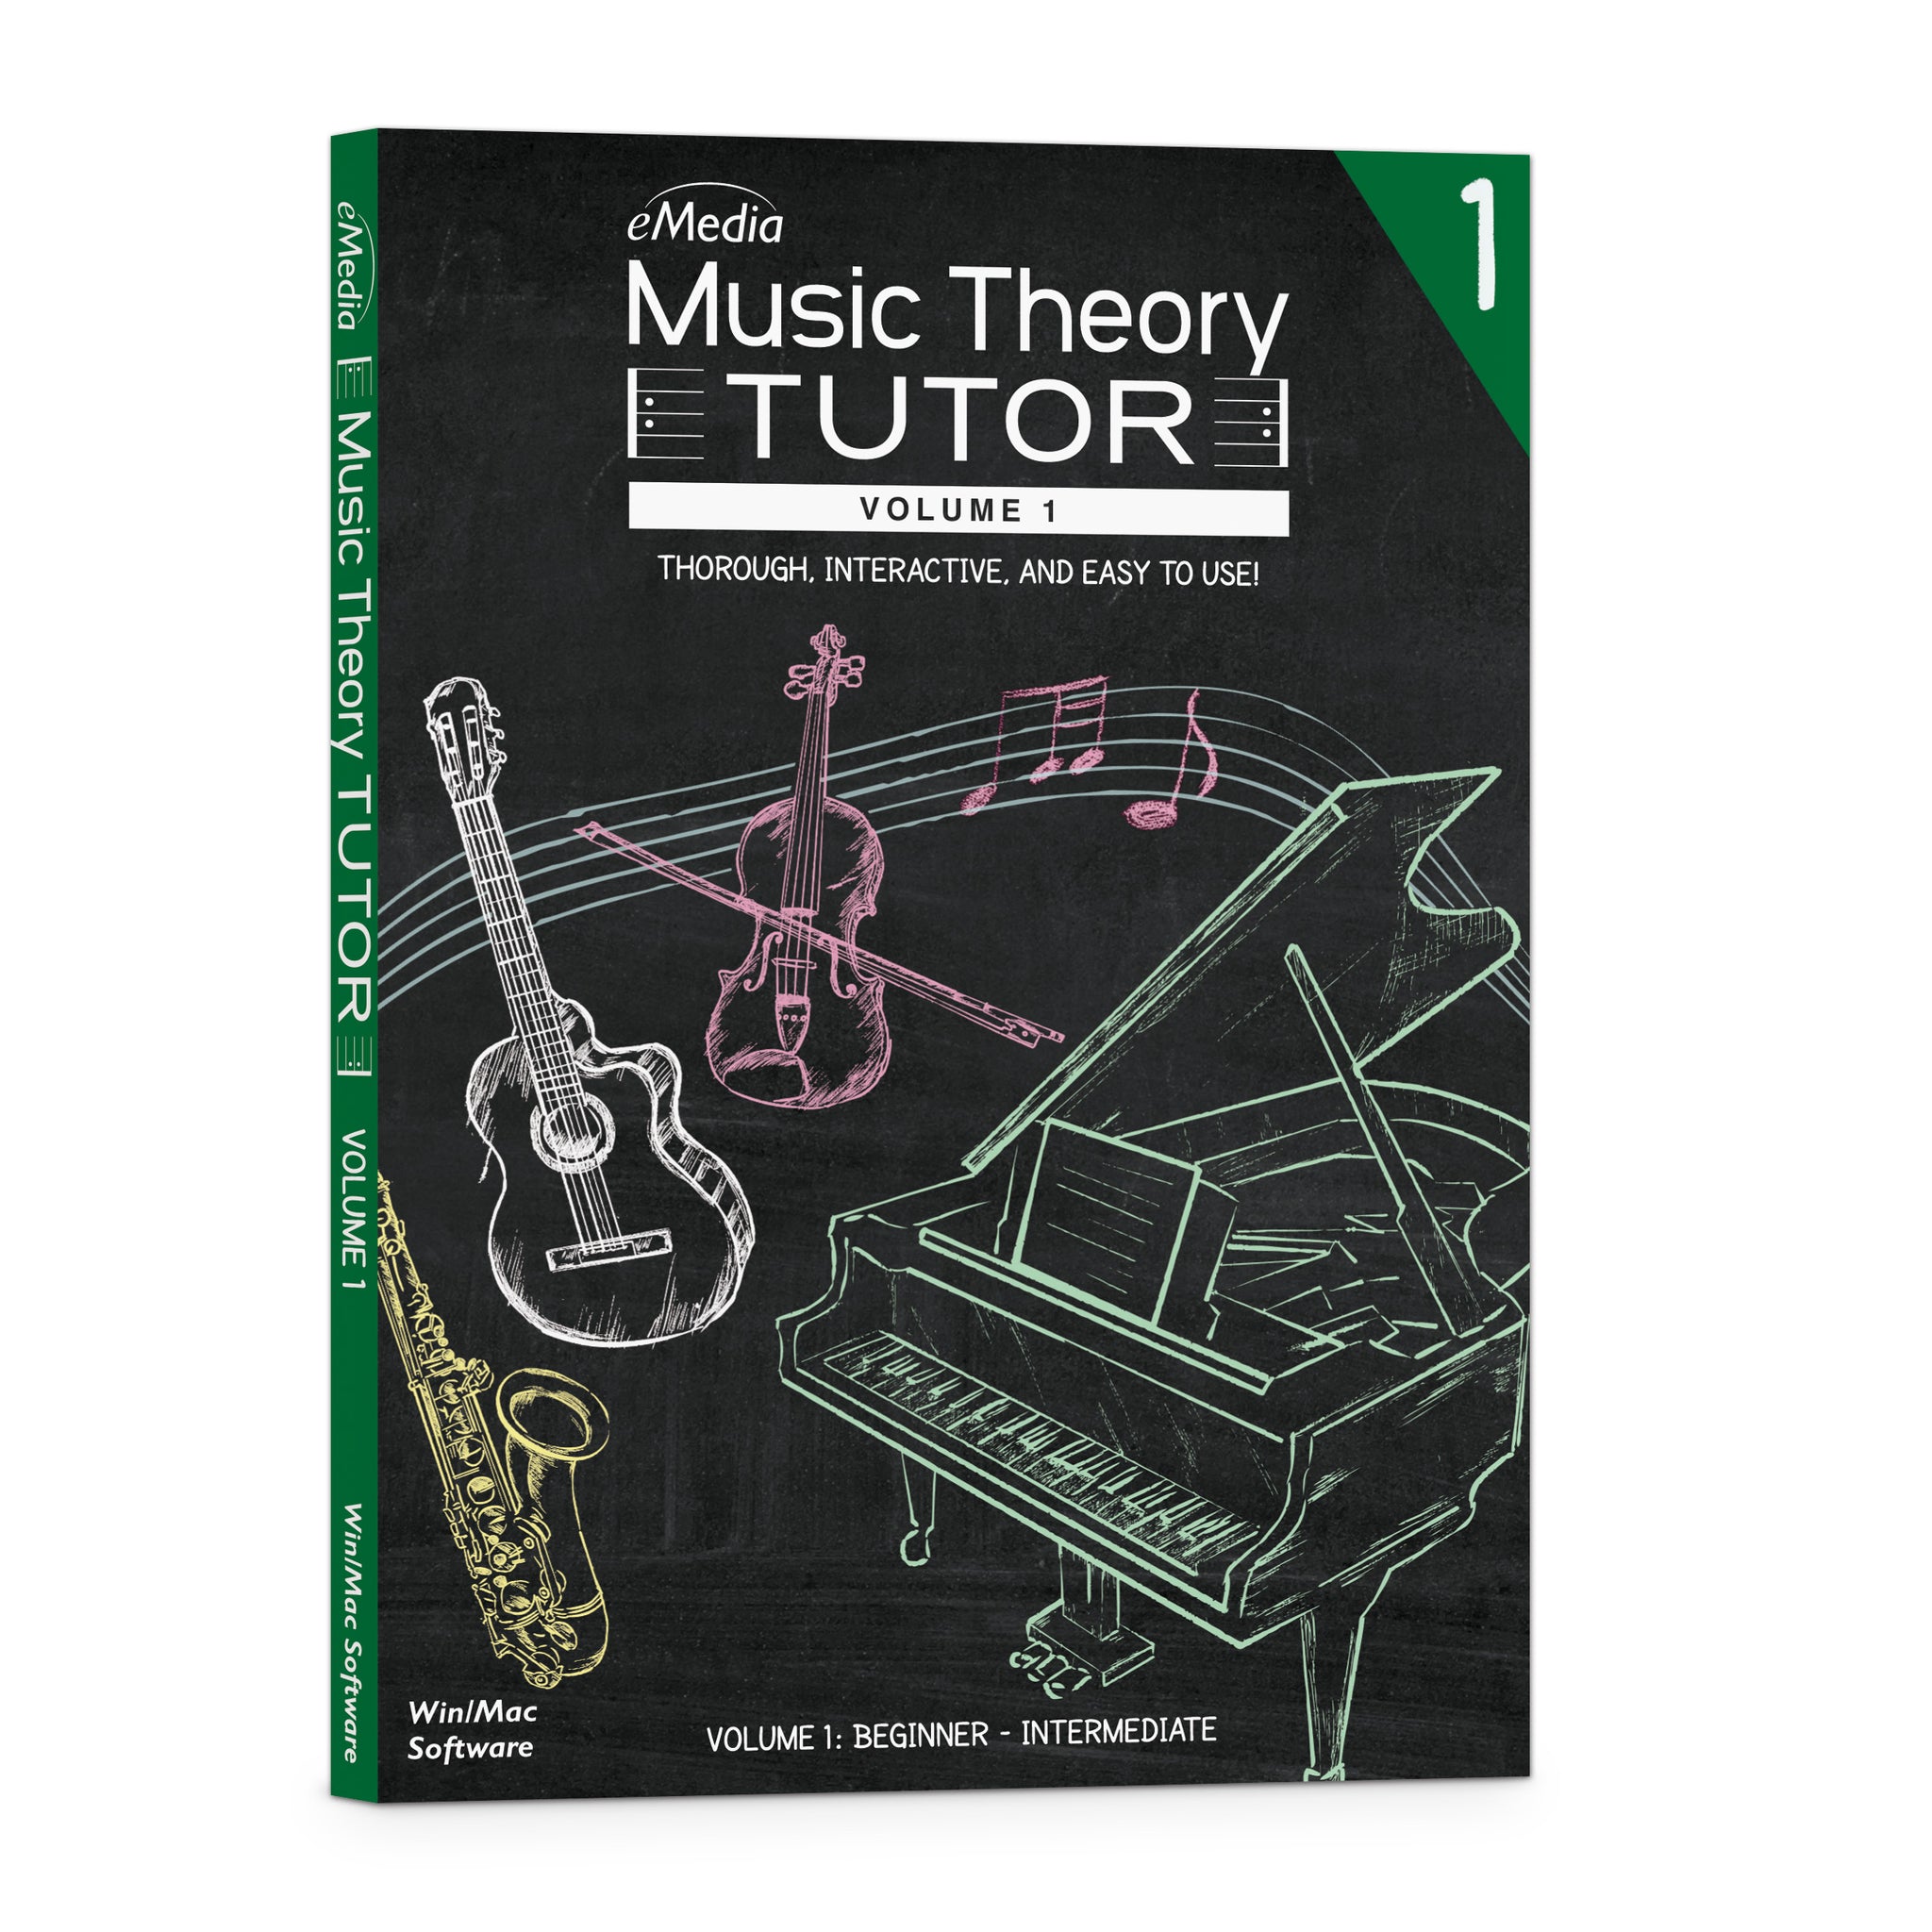 eMedia Music Theory Tutor, Volume 1